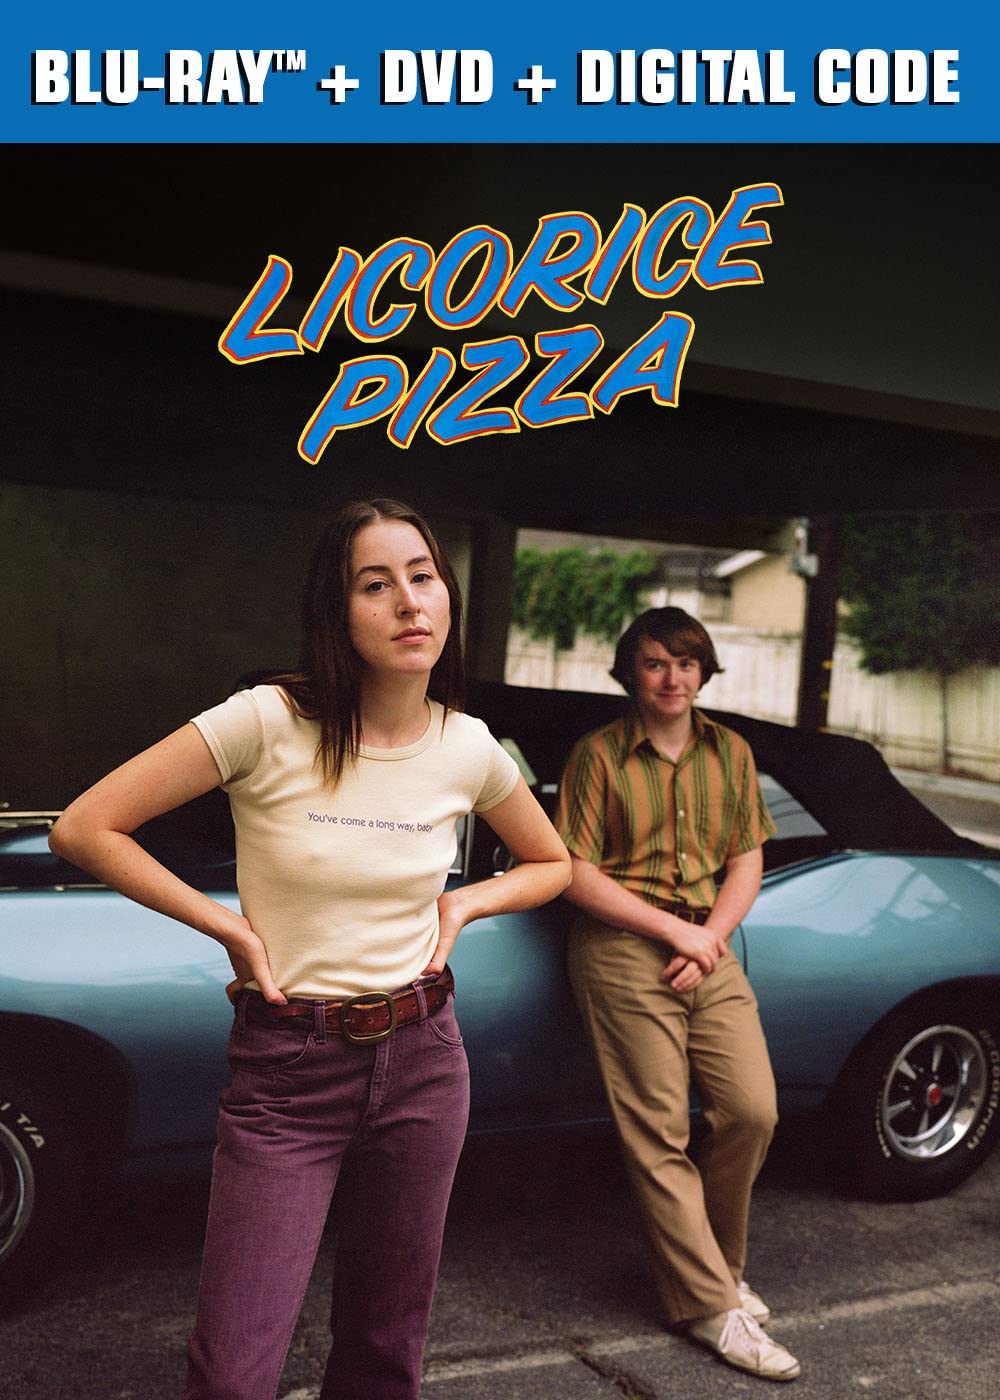 https://s1.occld.com/image/kb/kb_licorice-pizza-cover.jpg